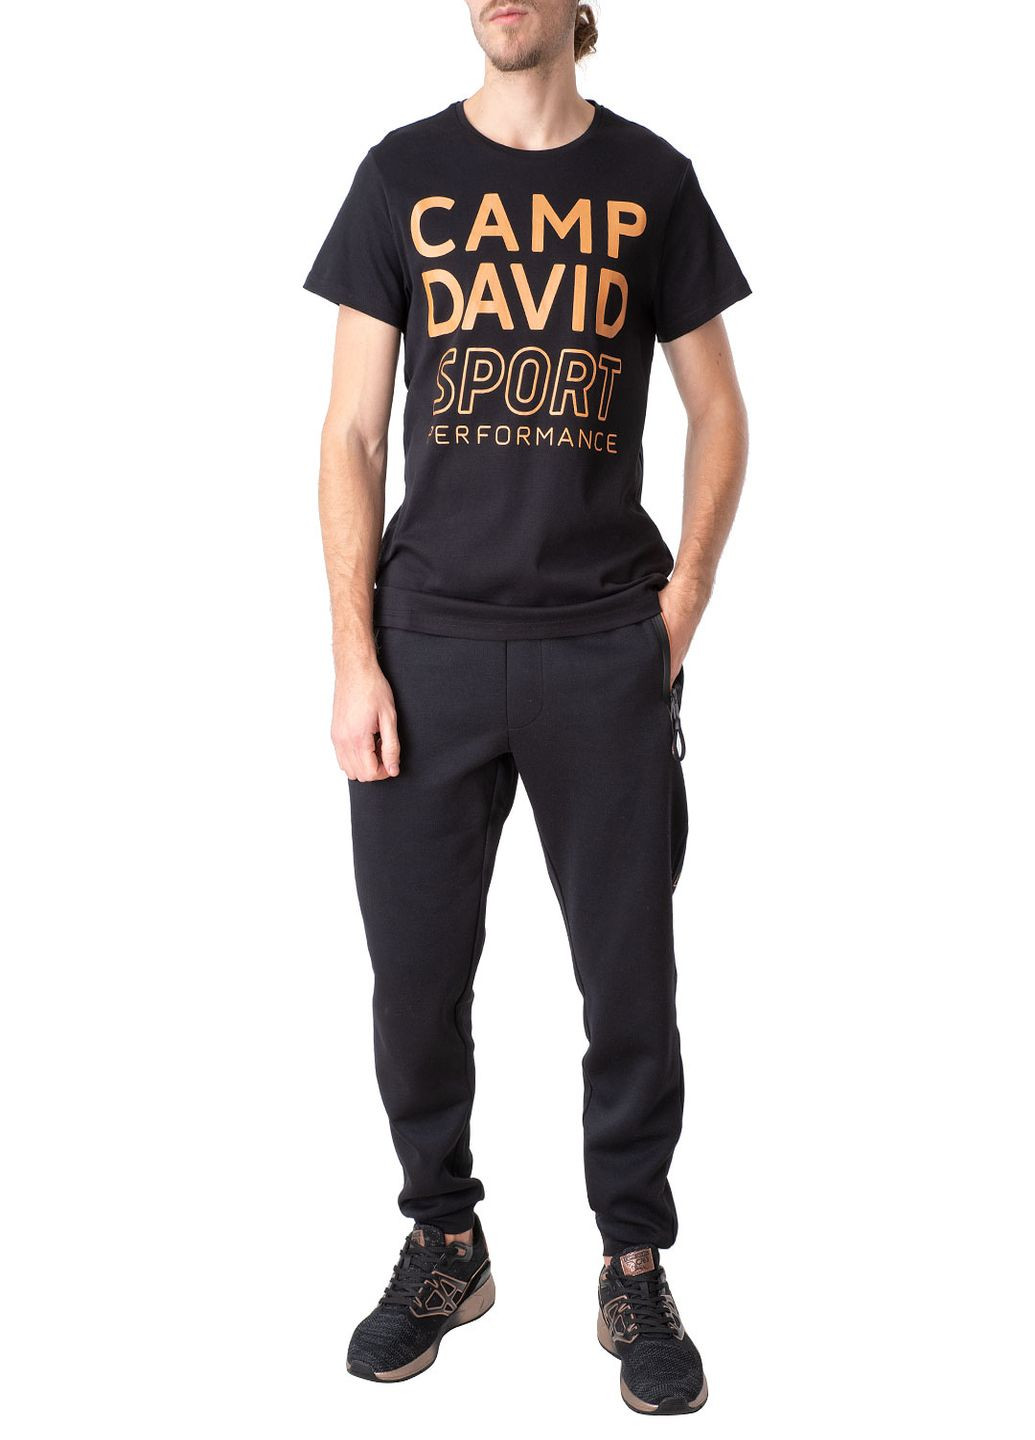 Черная футболка Camp David